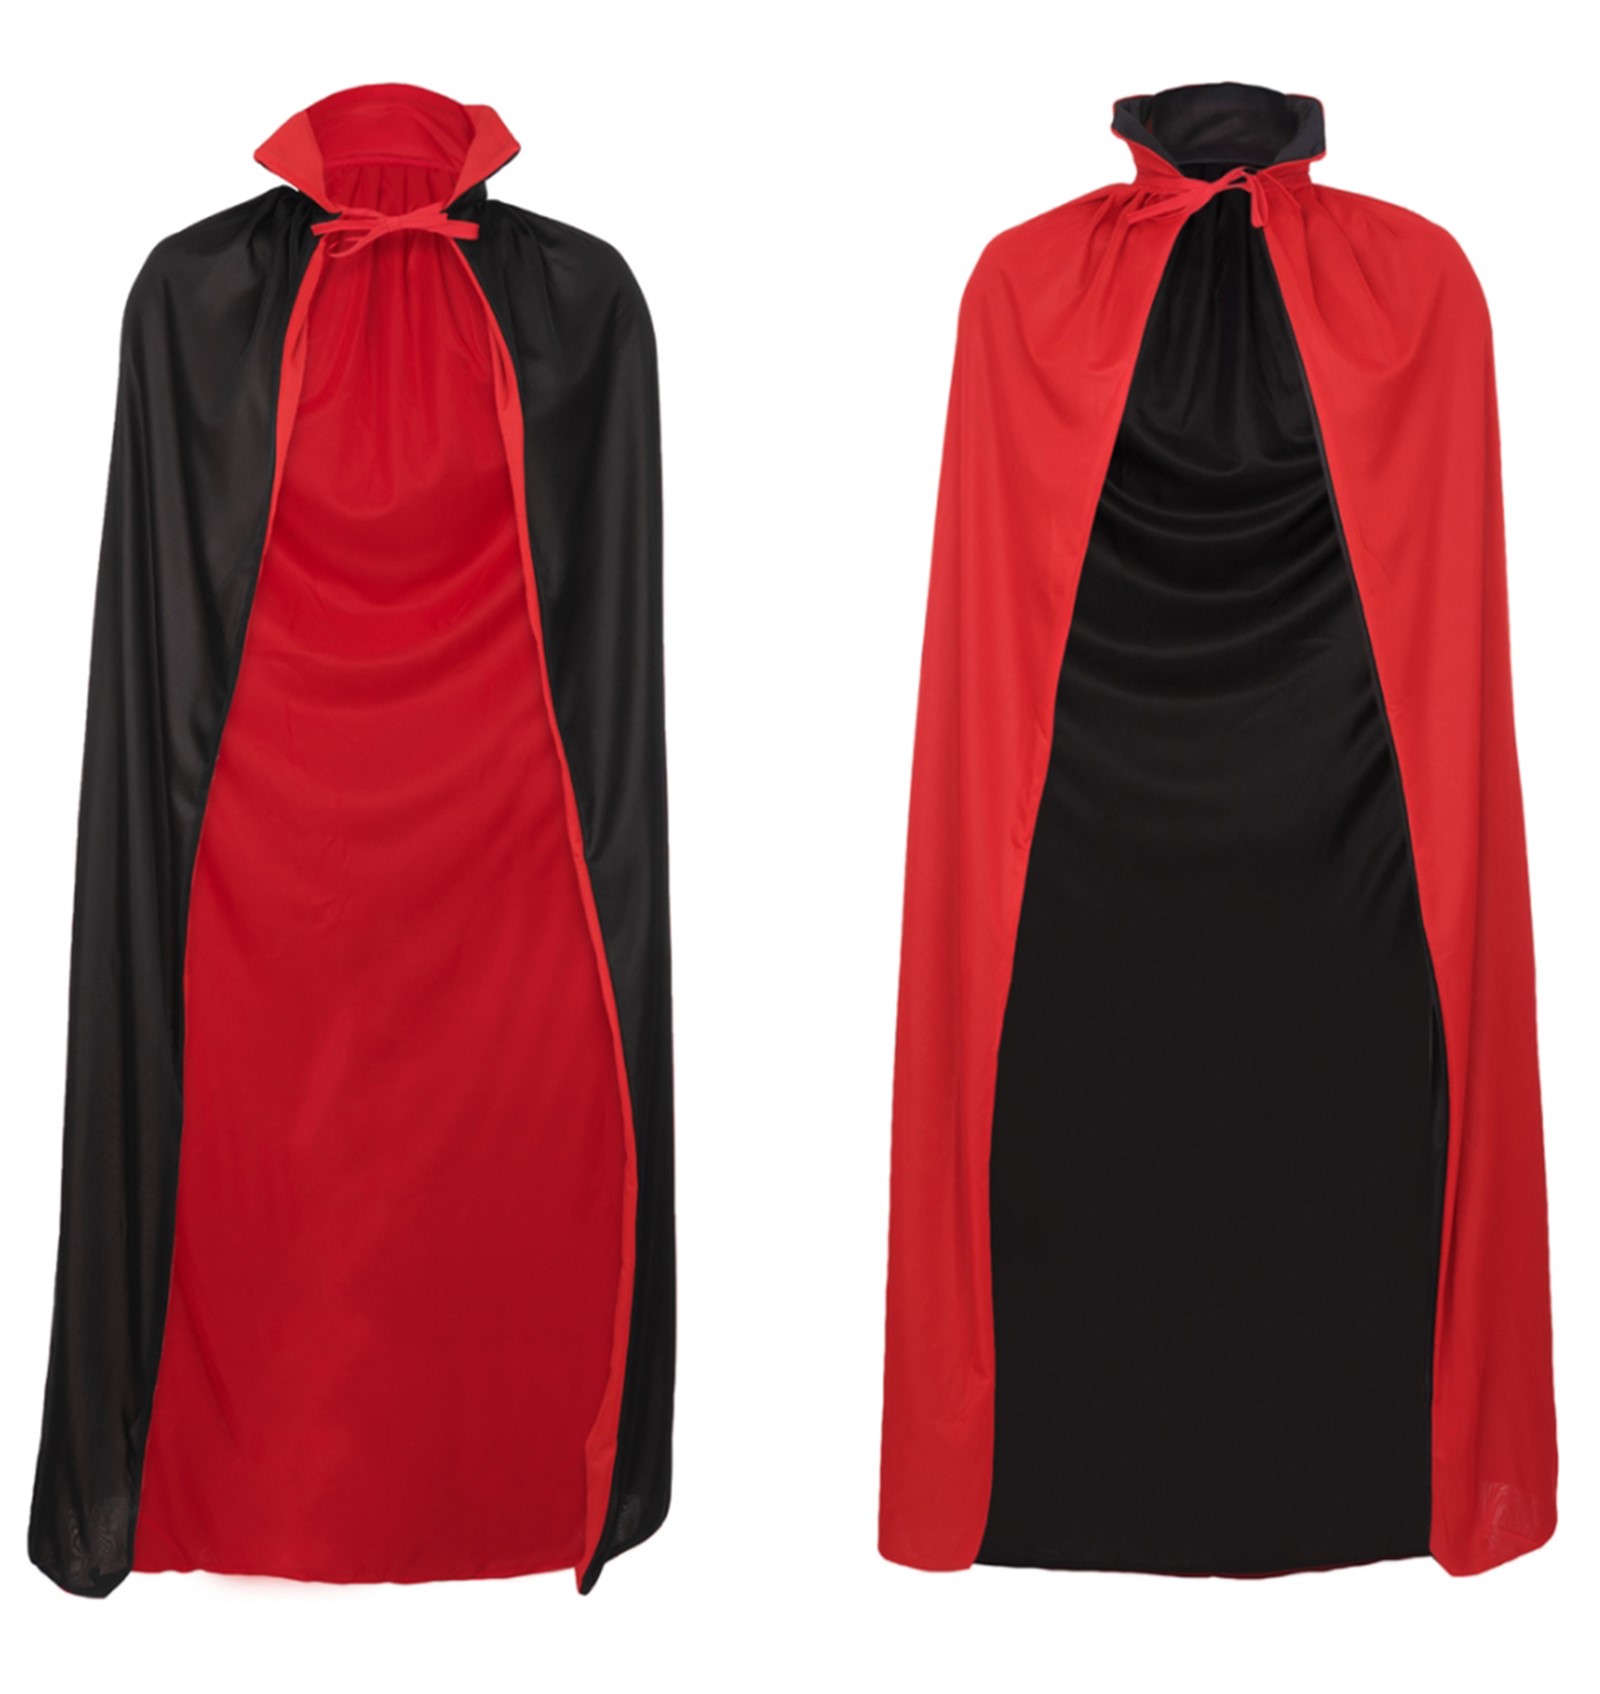 HALLOWEEN CAPE VAMPIRE DRACULA CAPE BLACK AND RED FANCY DRESS HALLOWEEN ...